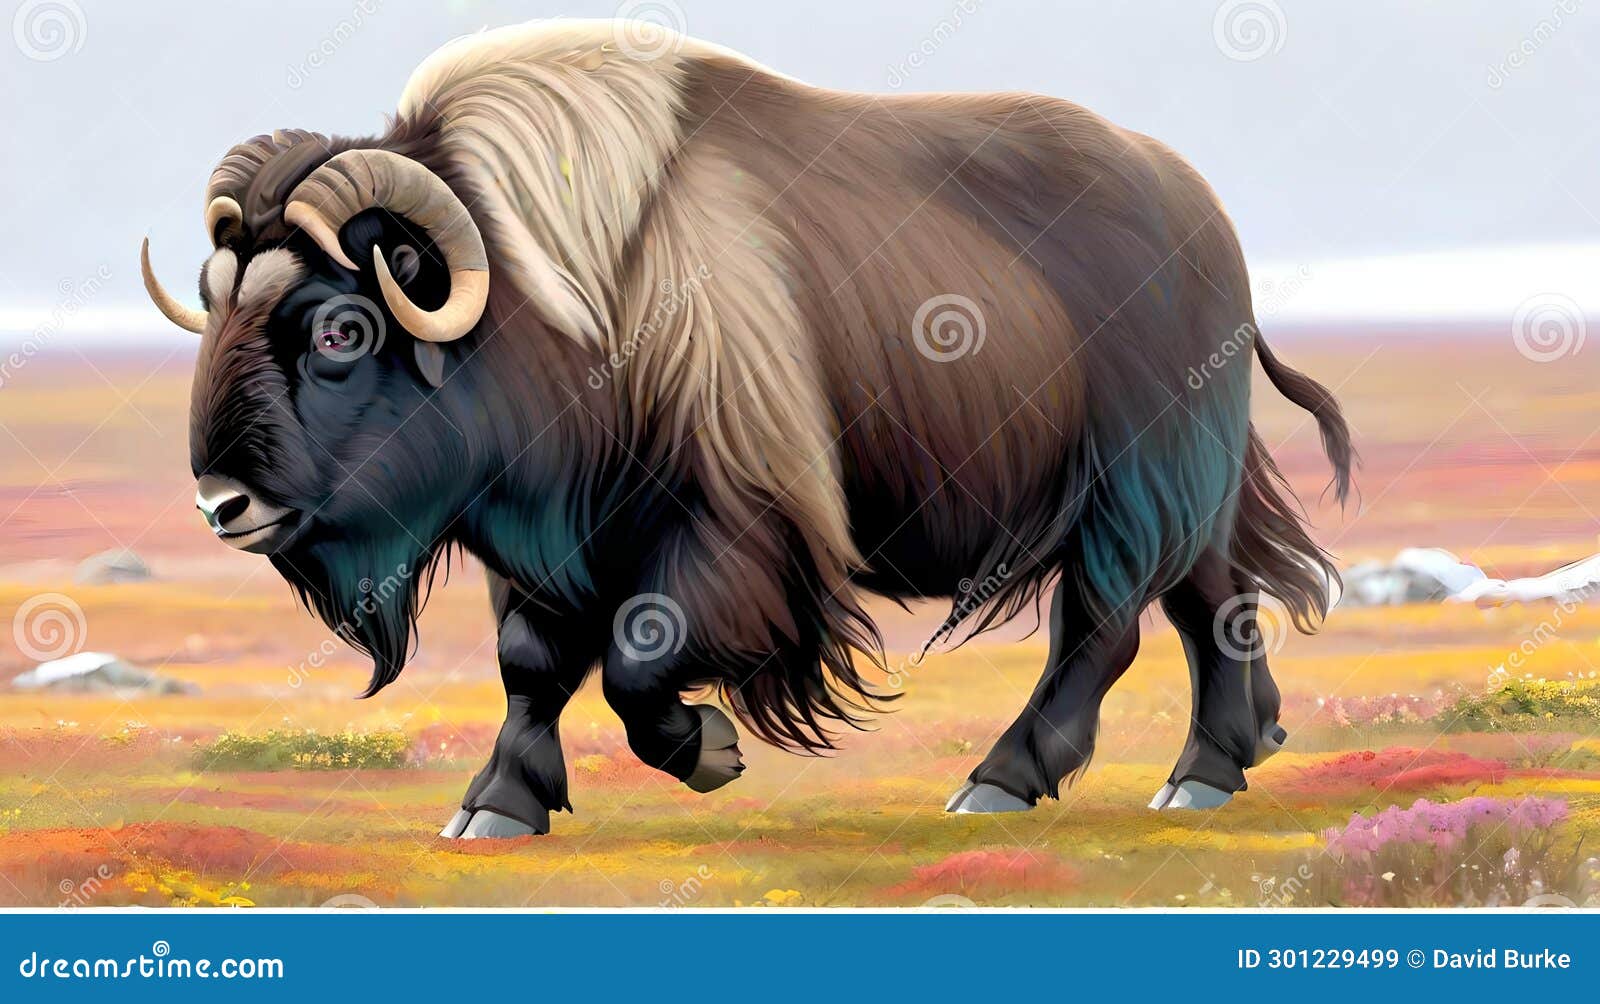 cape buffalo large bovine animal domesticated horns curl